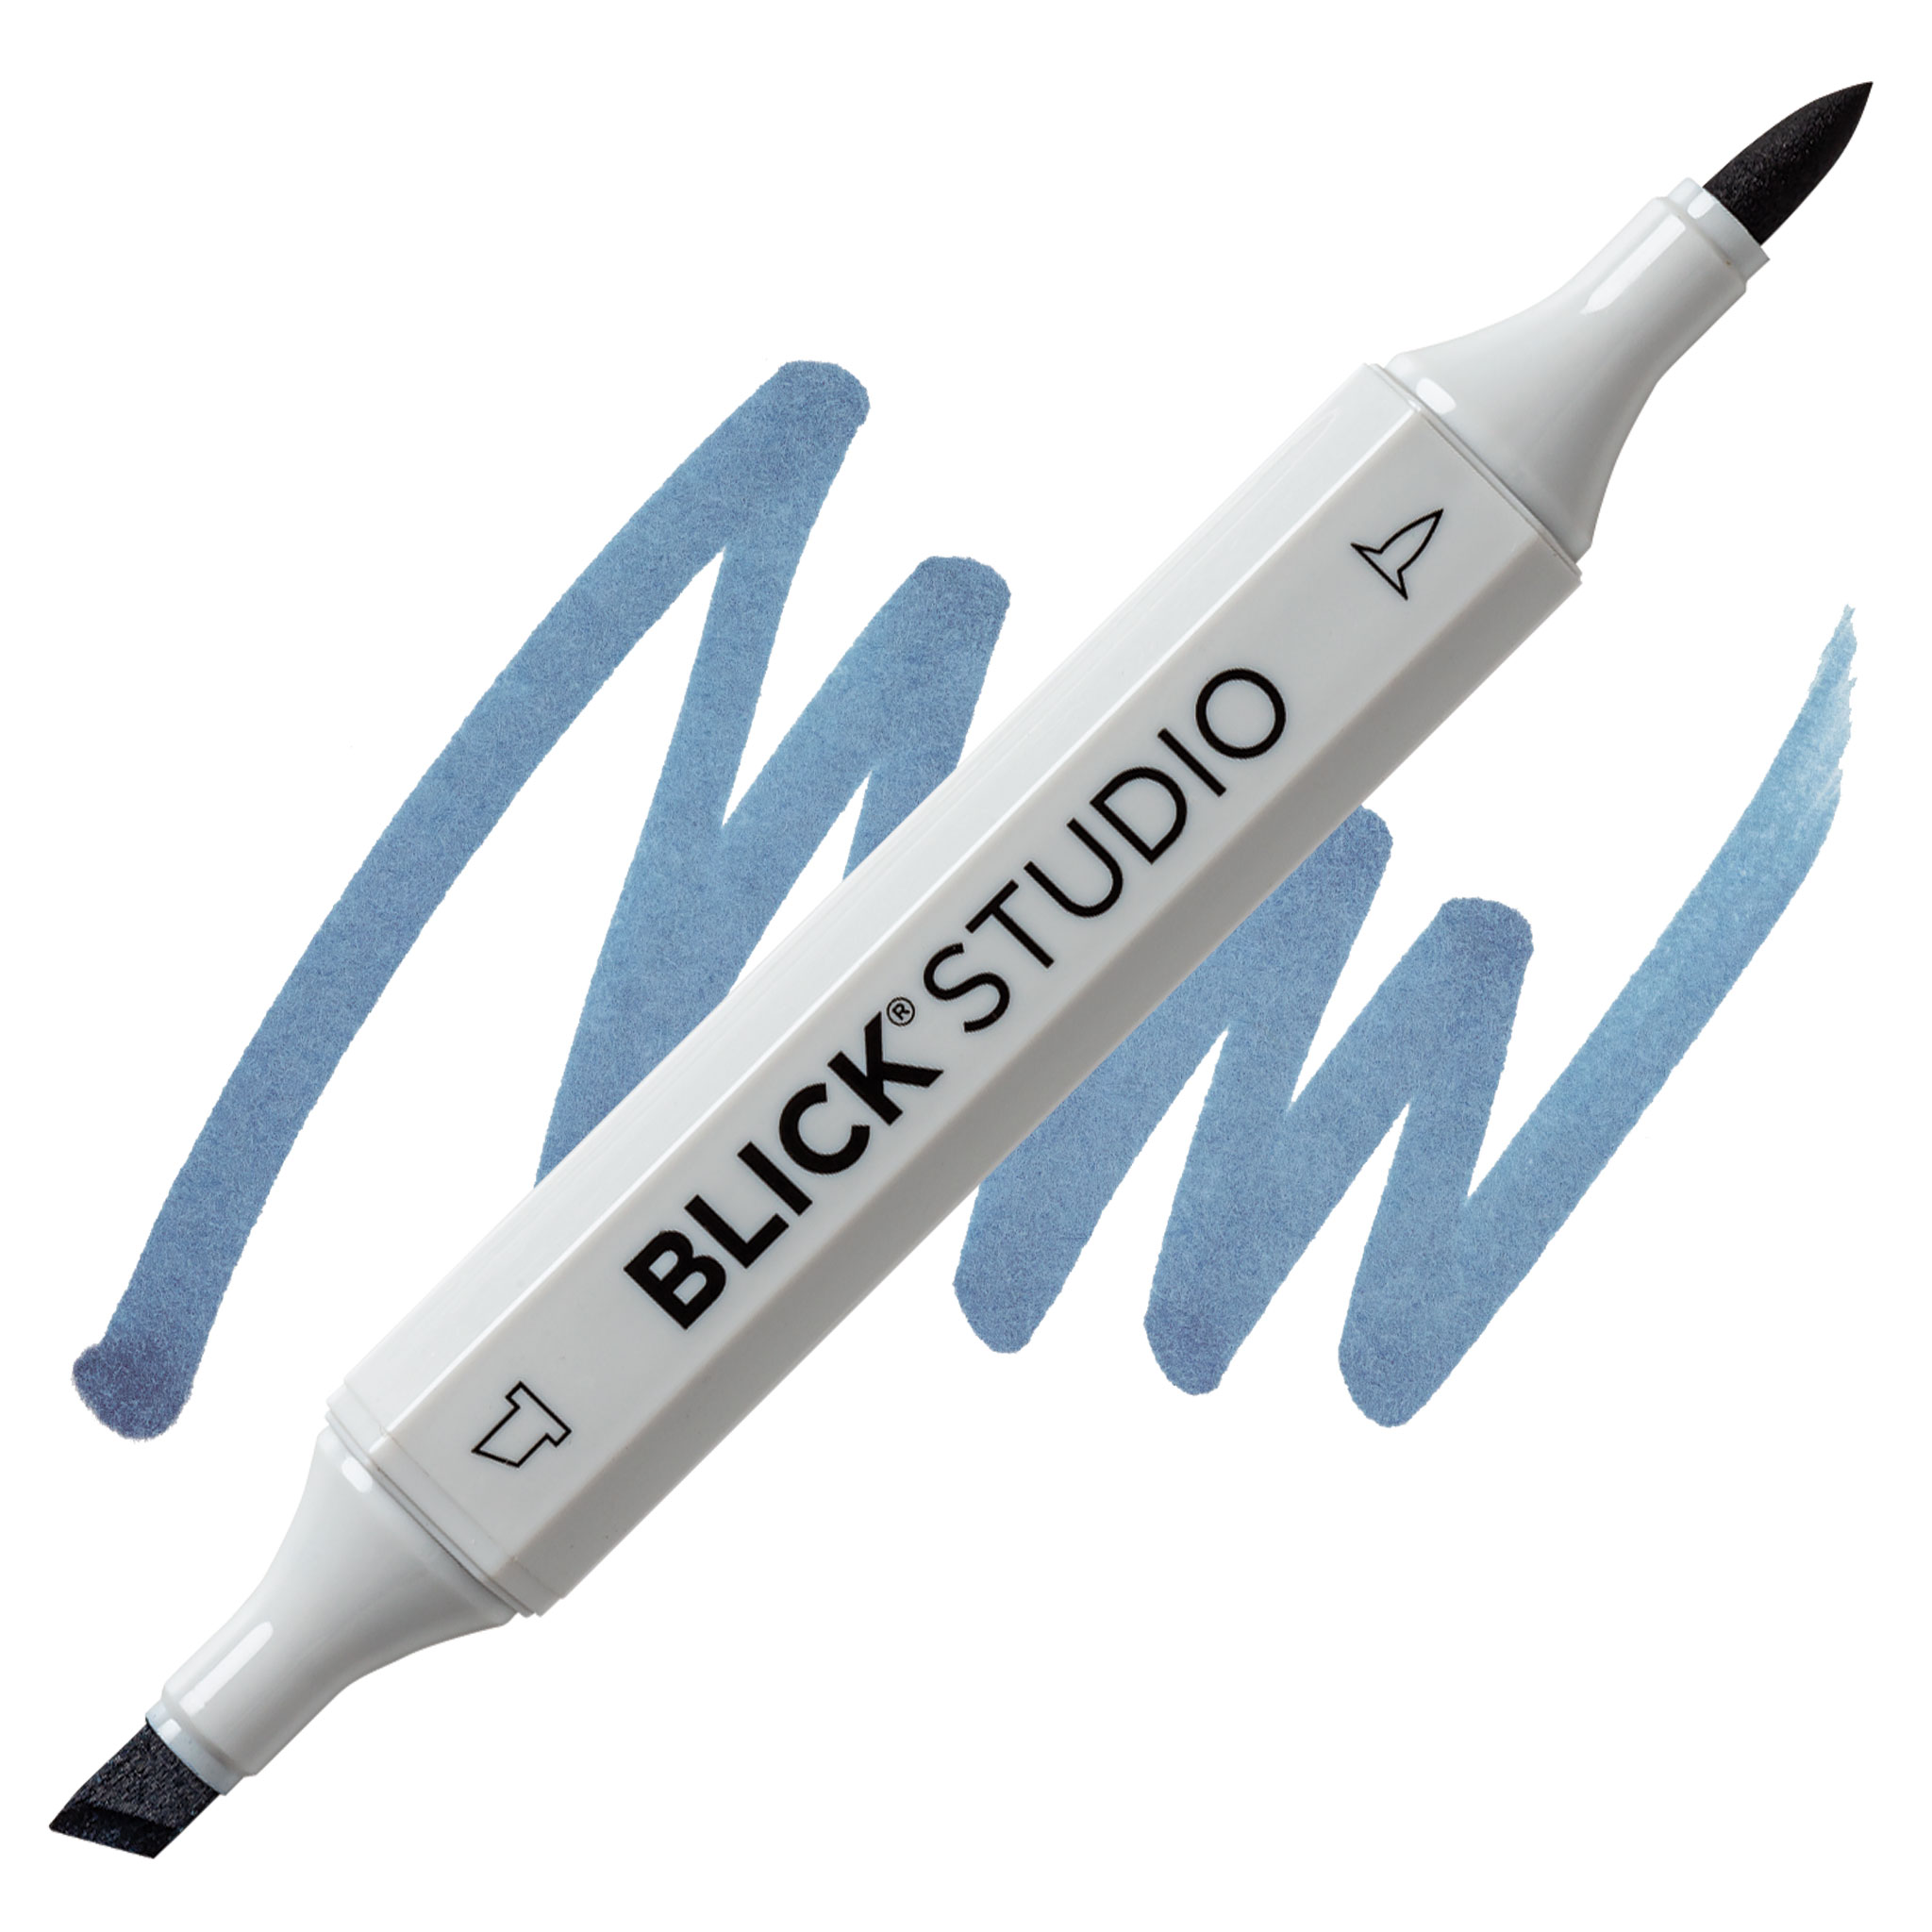 Blick Illustrator Markers - Set of 12